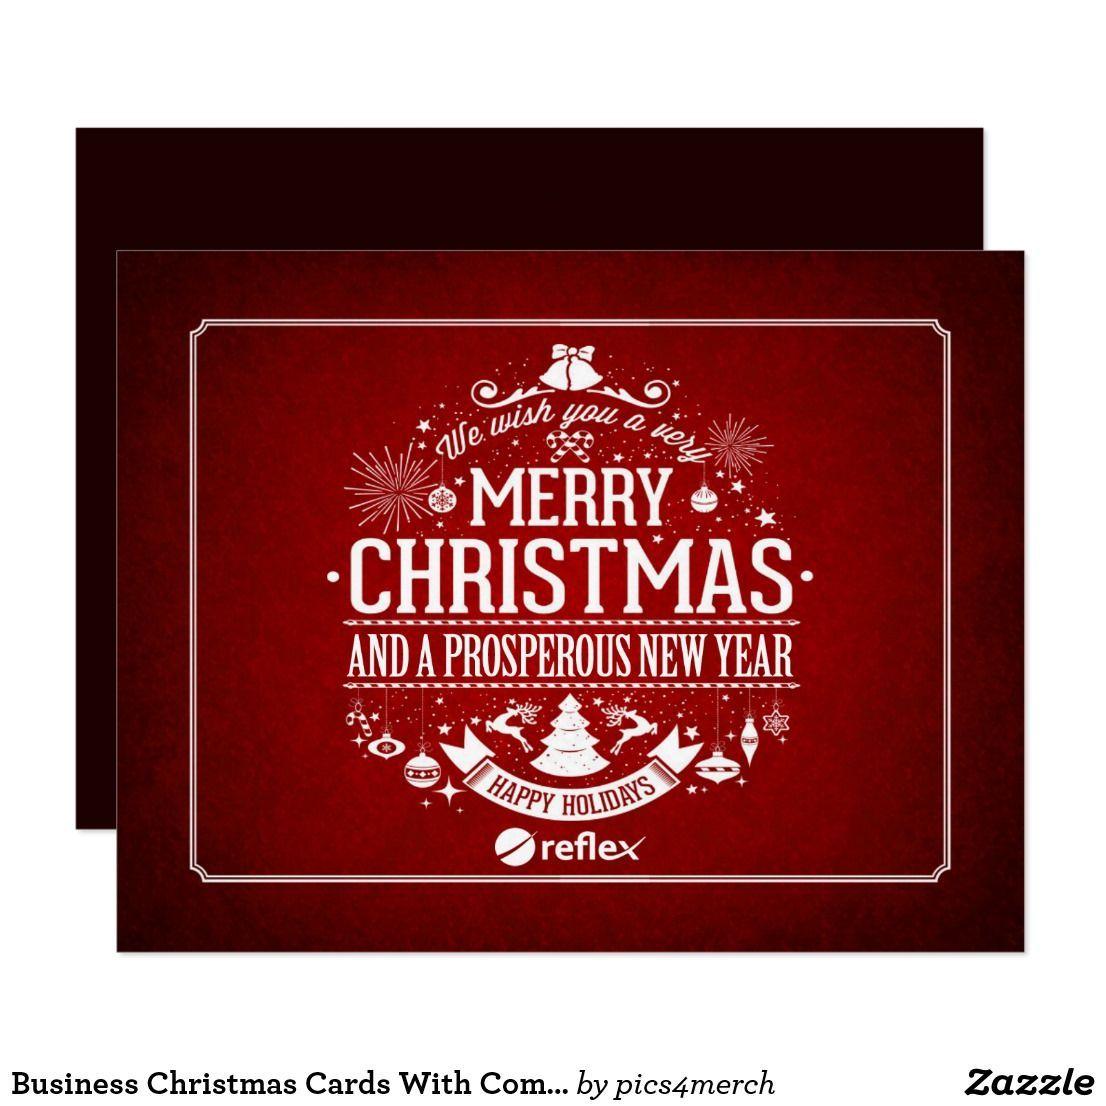 Red Rectangle Company Logo - Business Christmas Cards With Company Logo. Business Cards